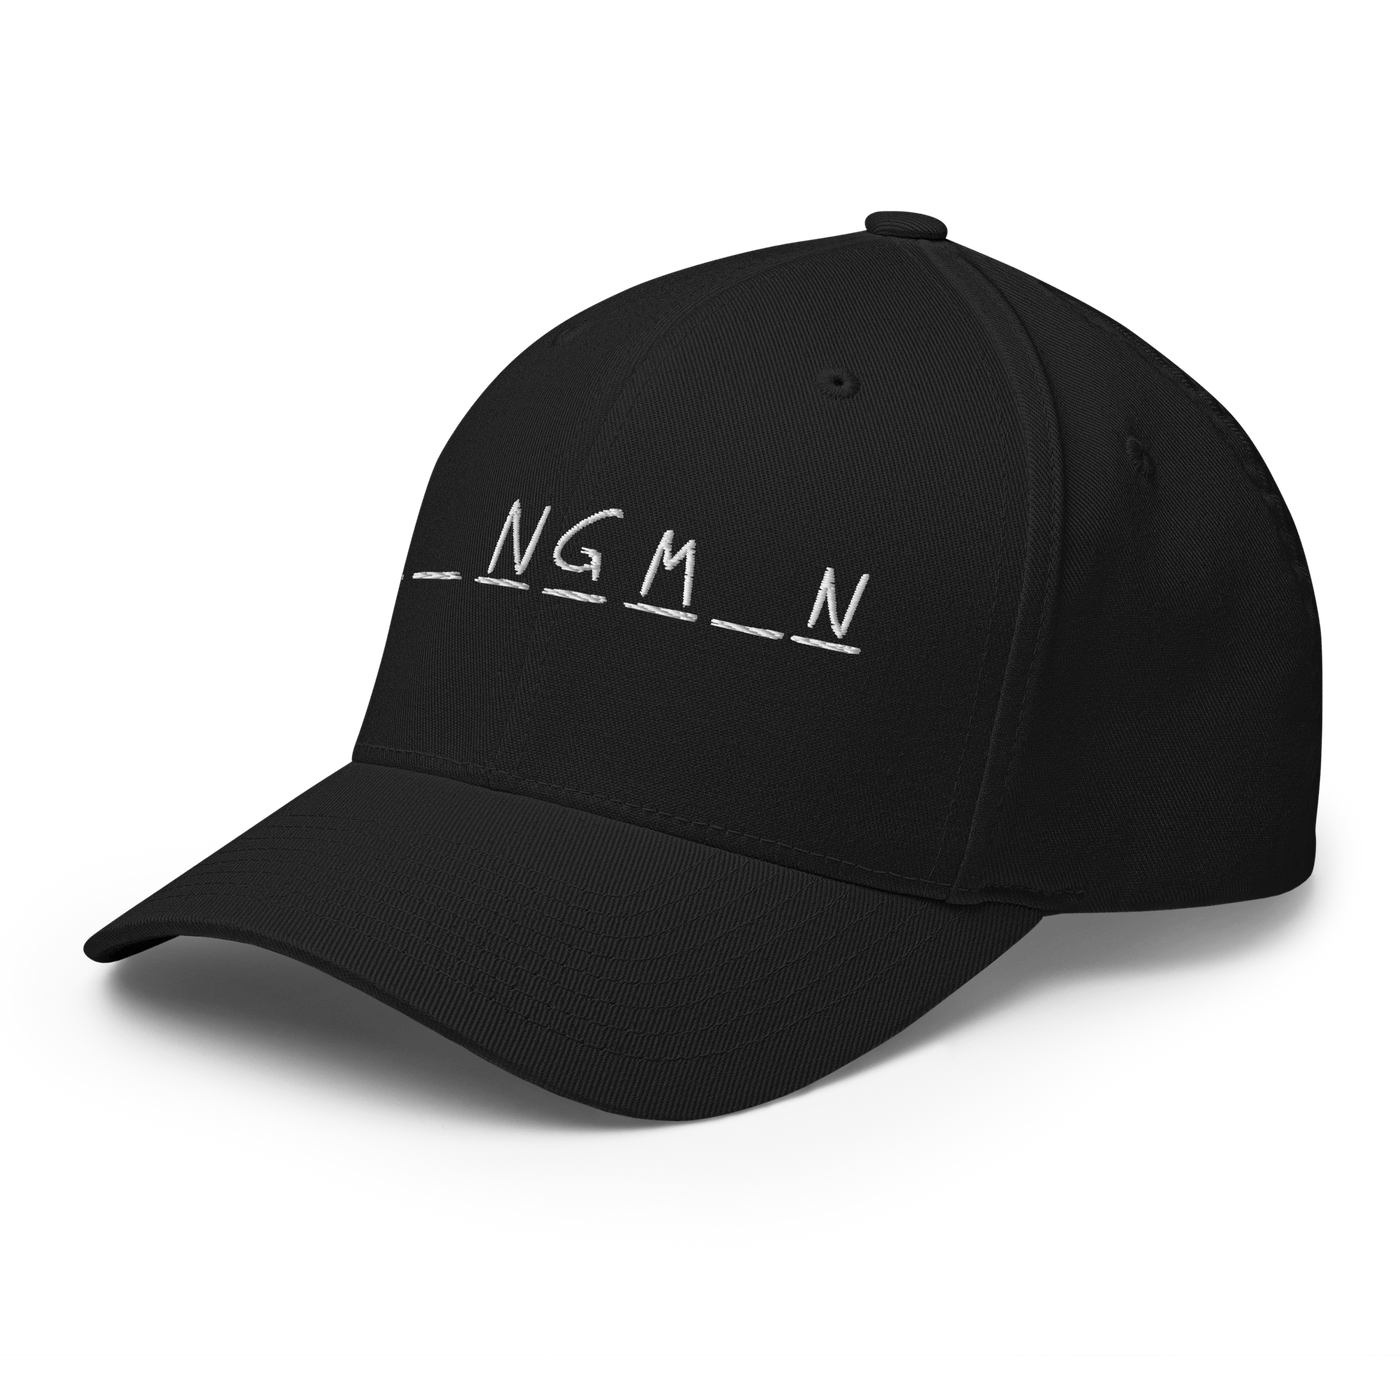 Hangman Flexfit Cap - Black - S/M - Just Another Cap Store